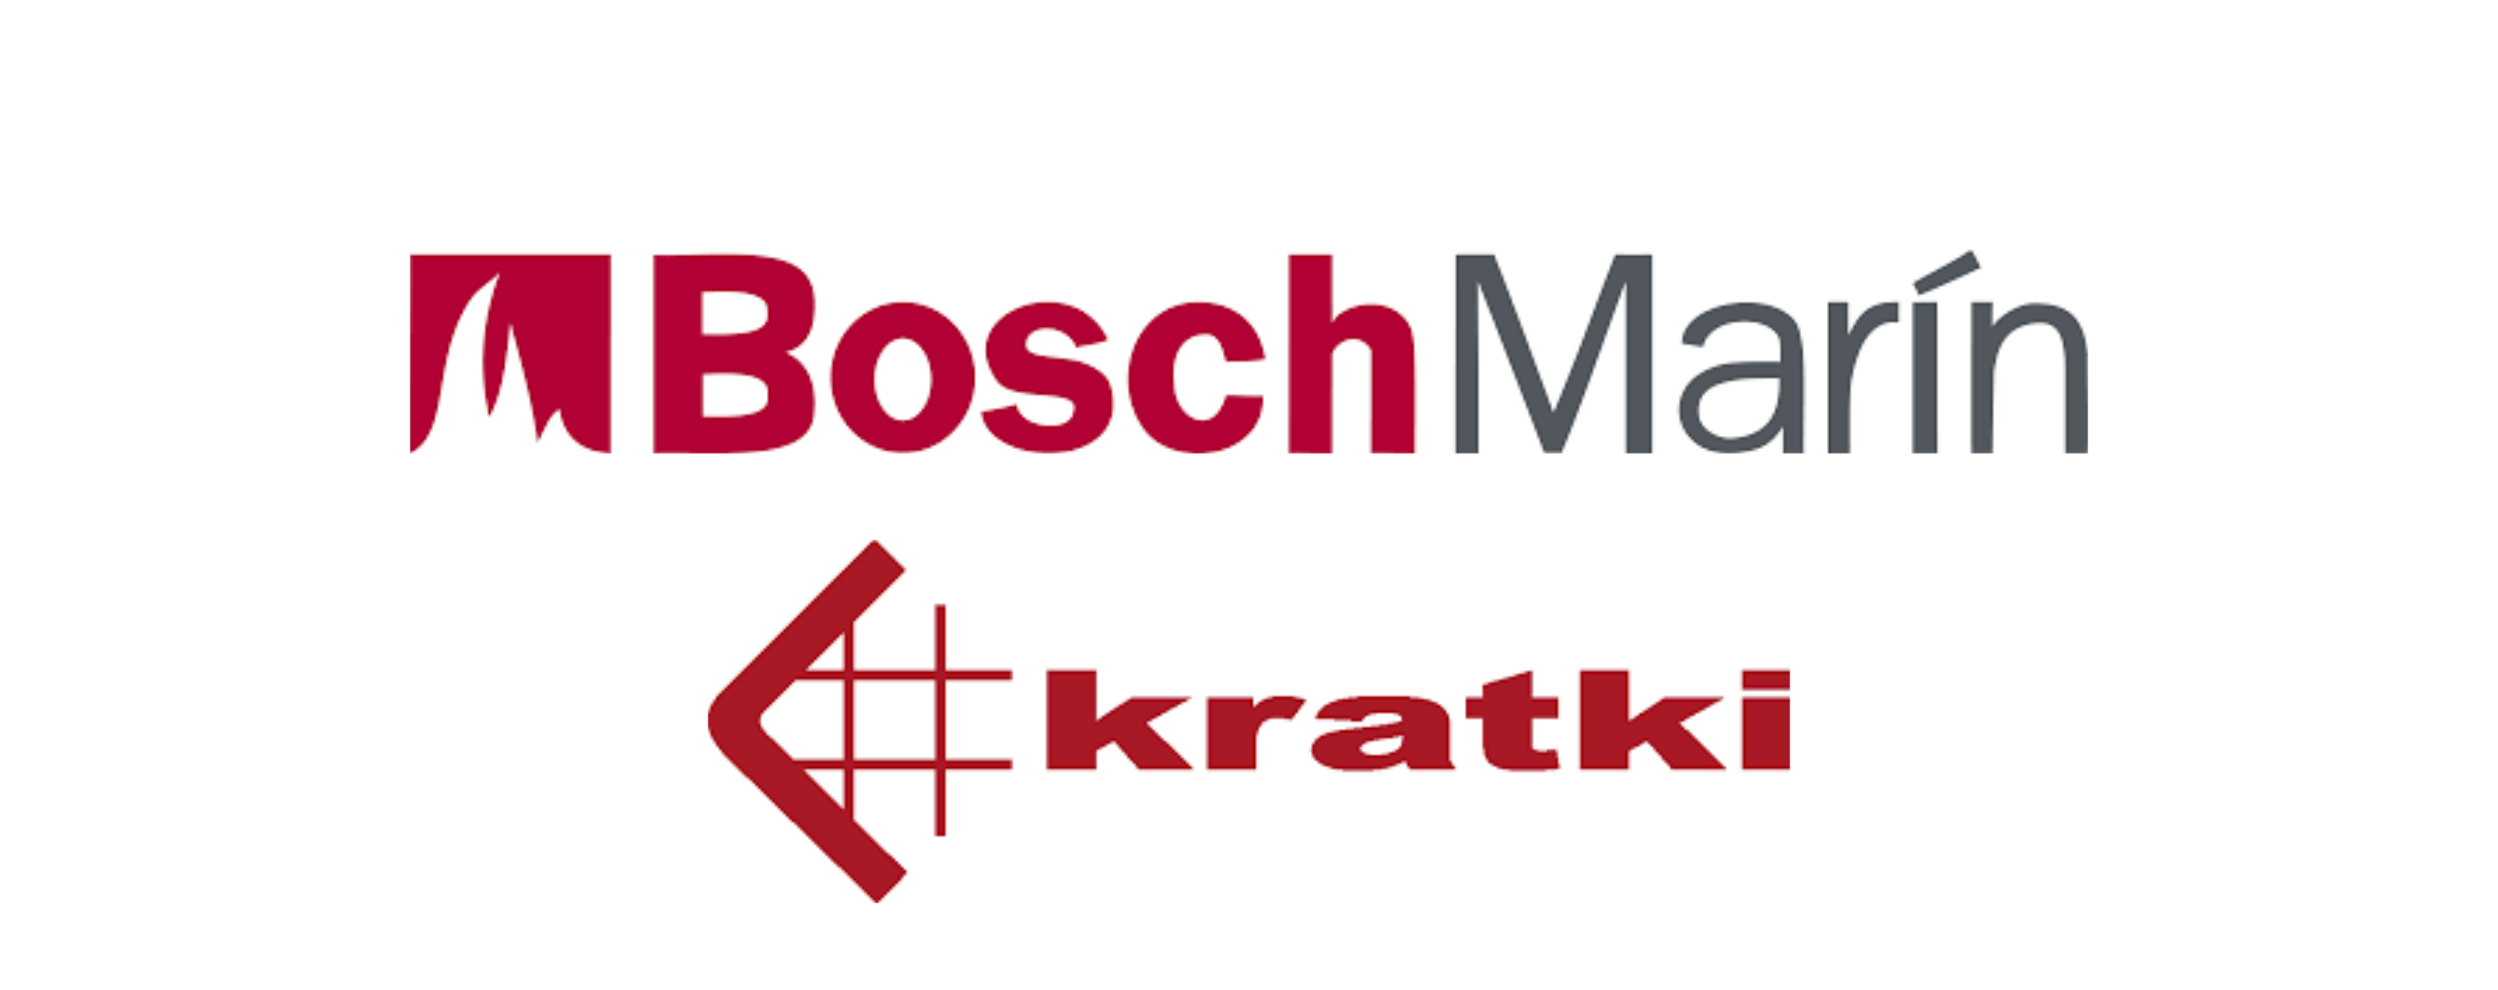 Bosch Marin presenta Kratki